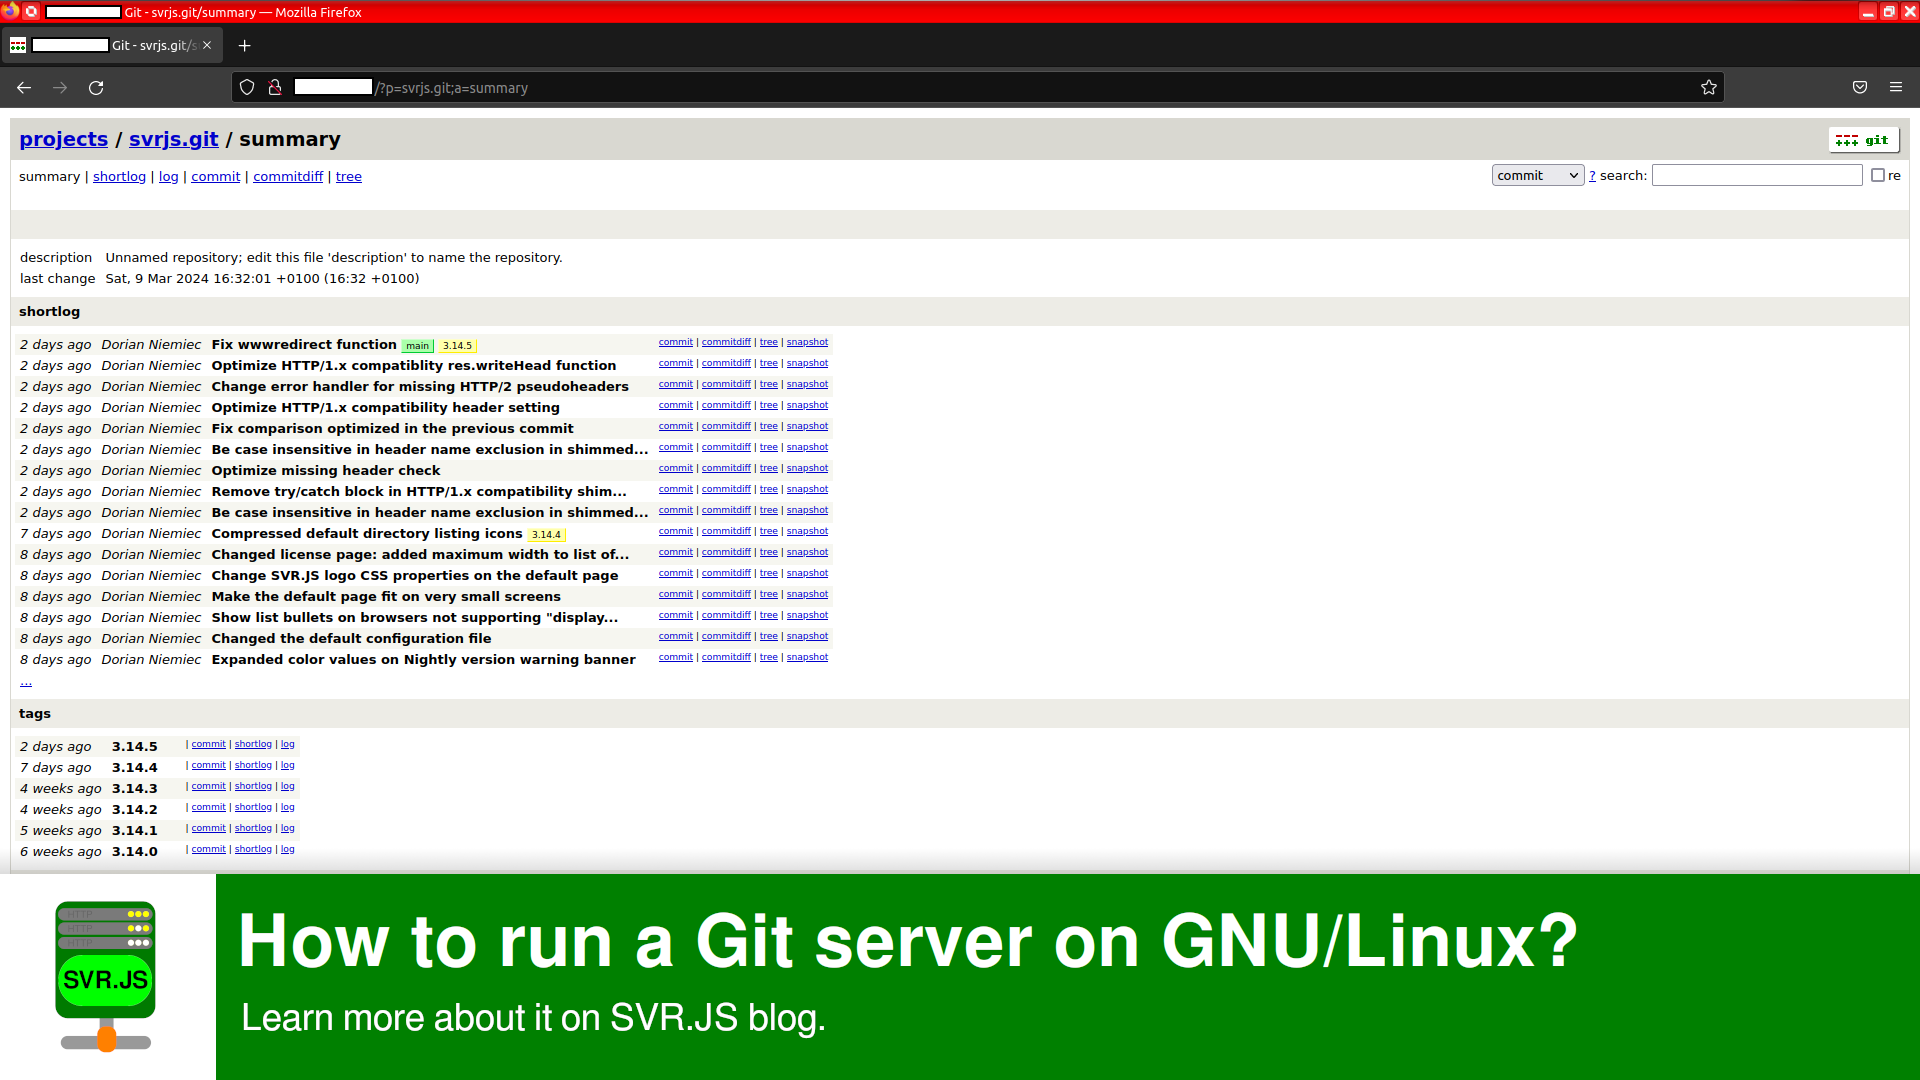 How to run a Git server on GNU/Linux?